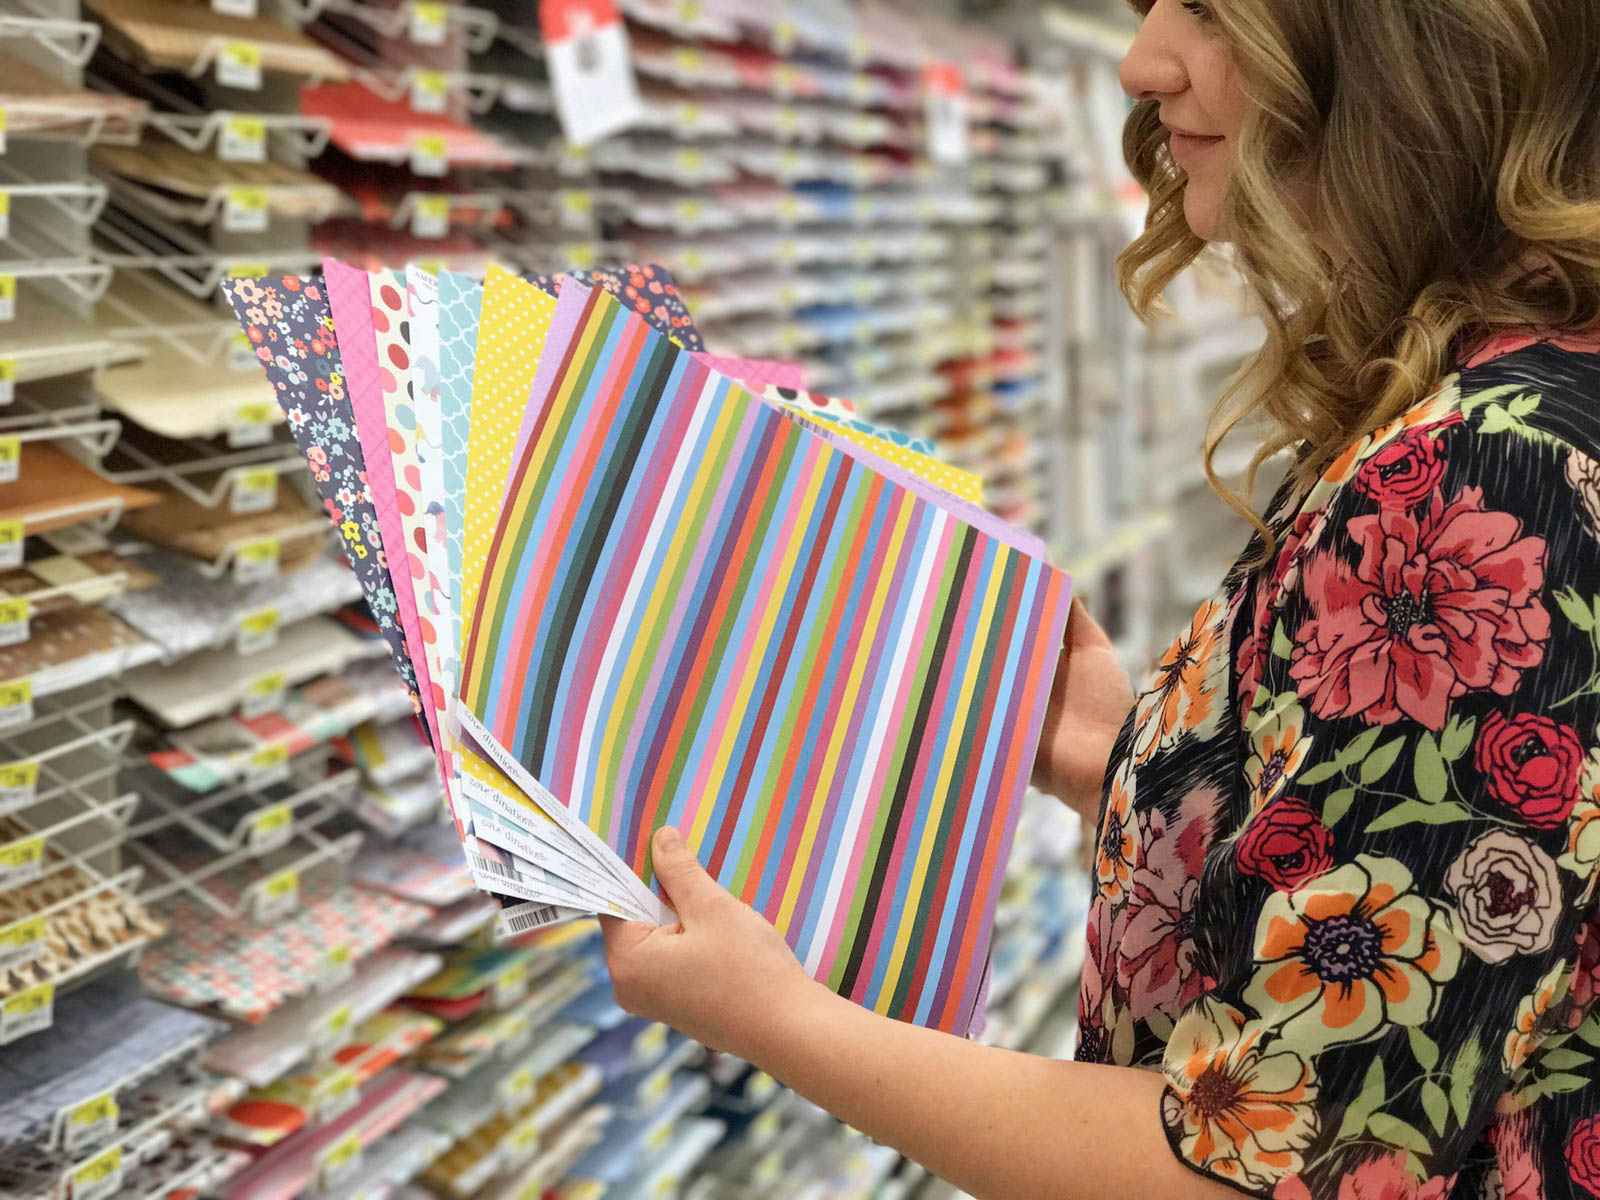 A woman looking at scrapbooking materials at a craft store.